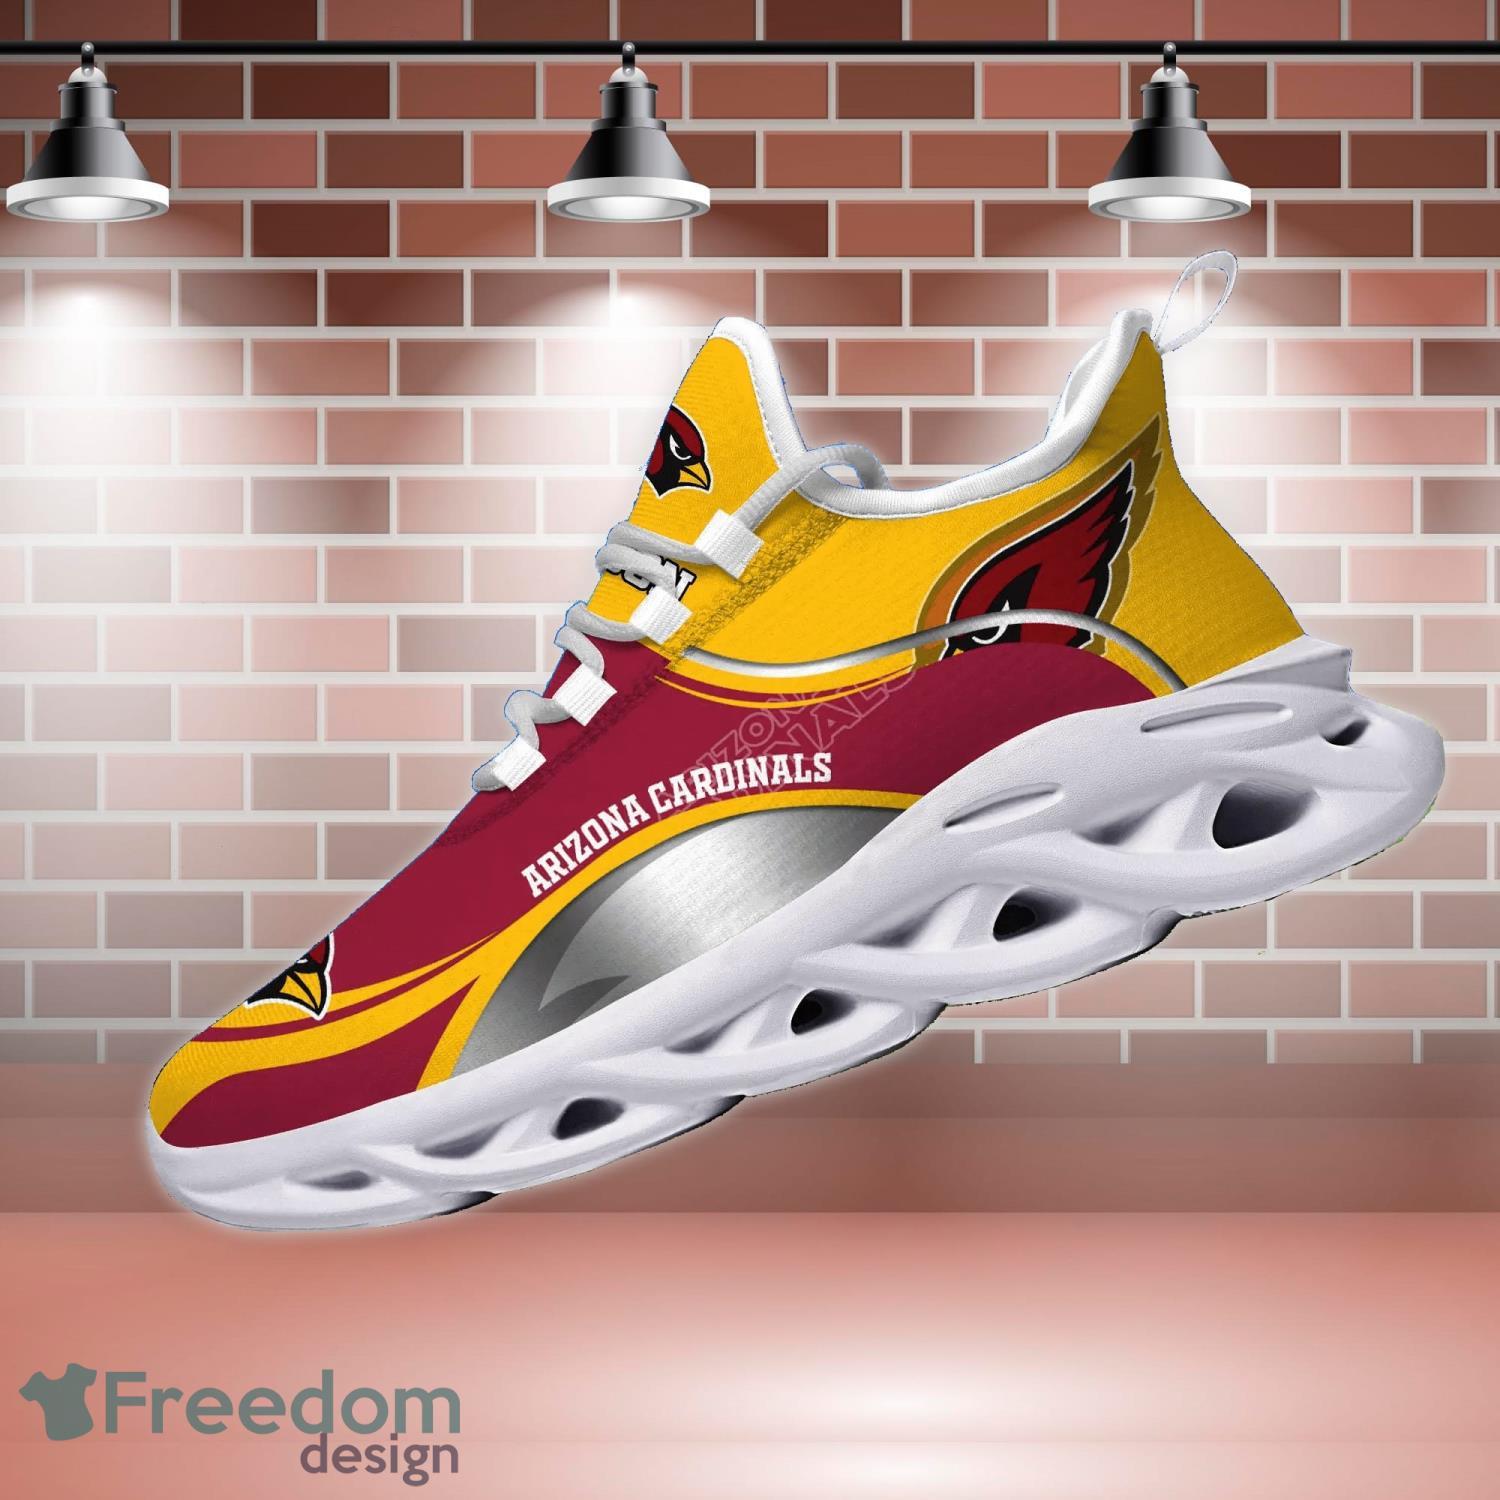 Arizona Cardinals NFL Clunky Sneakers Max Soul Shoes - Growkoc